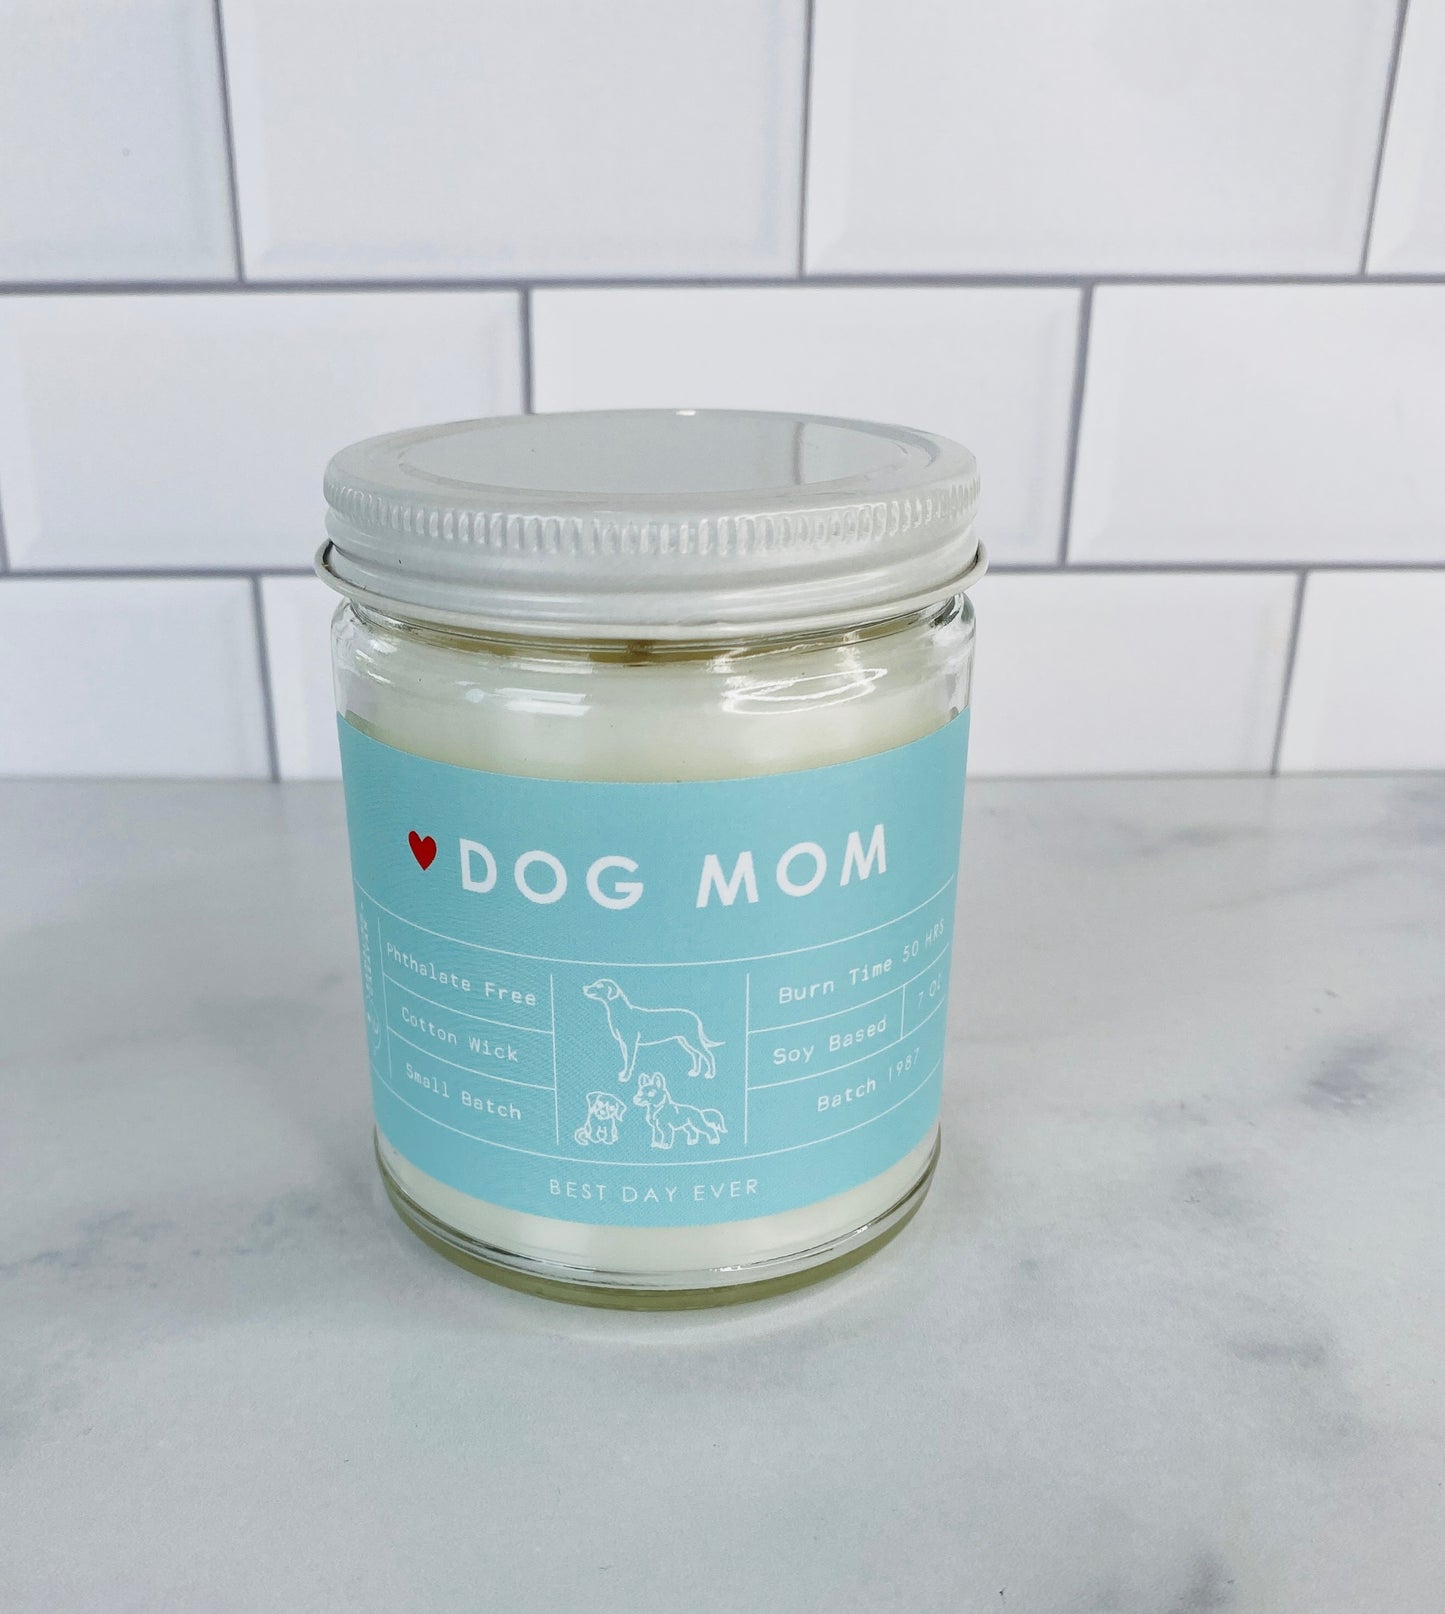 Dog Mom Candle